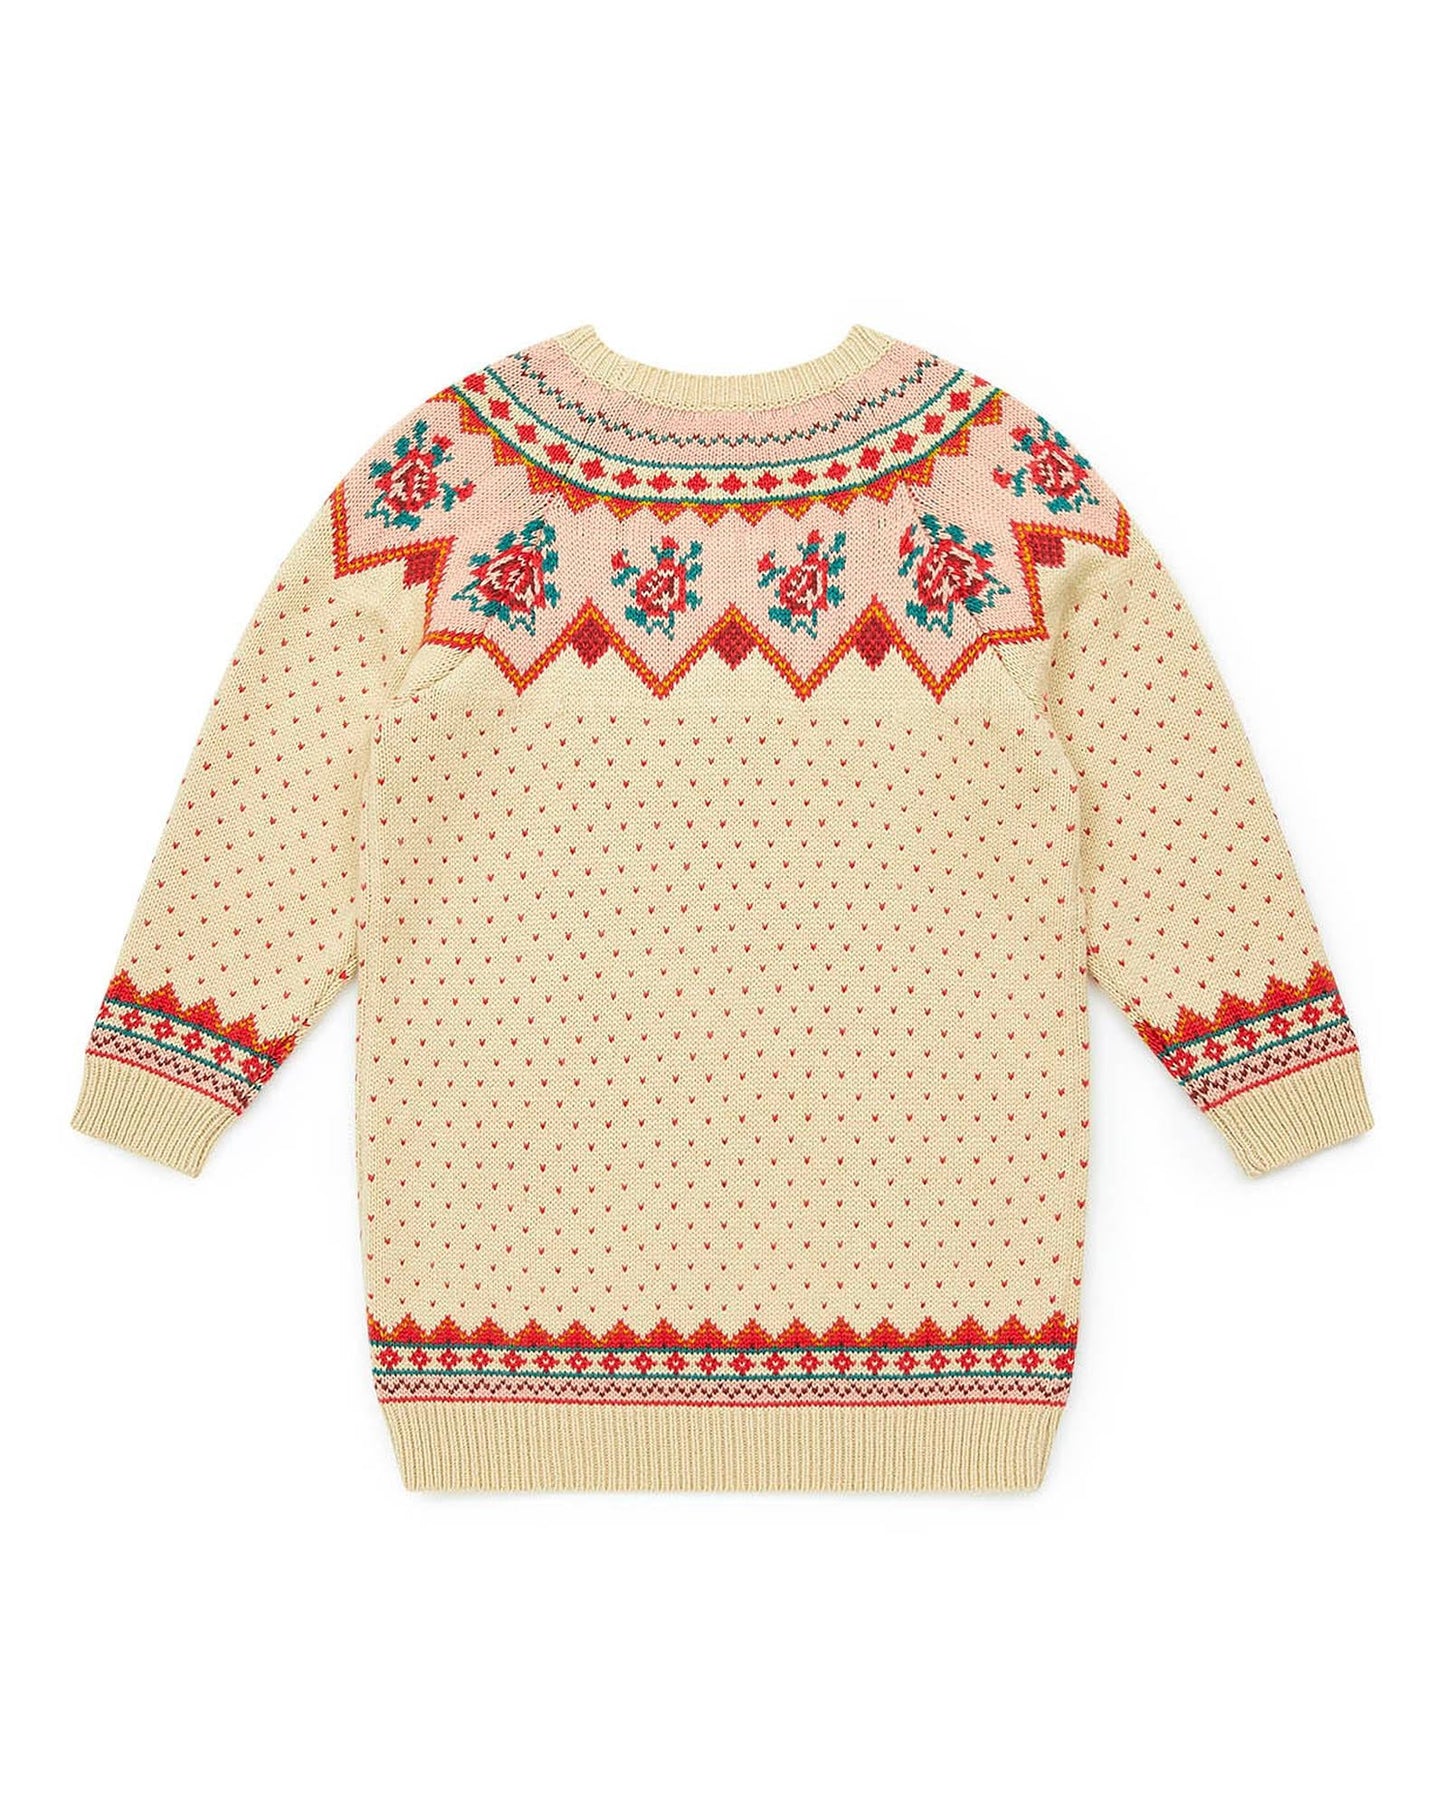 Dress Sweater Beige in jacquard knitting